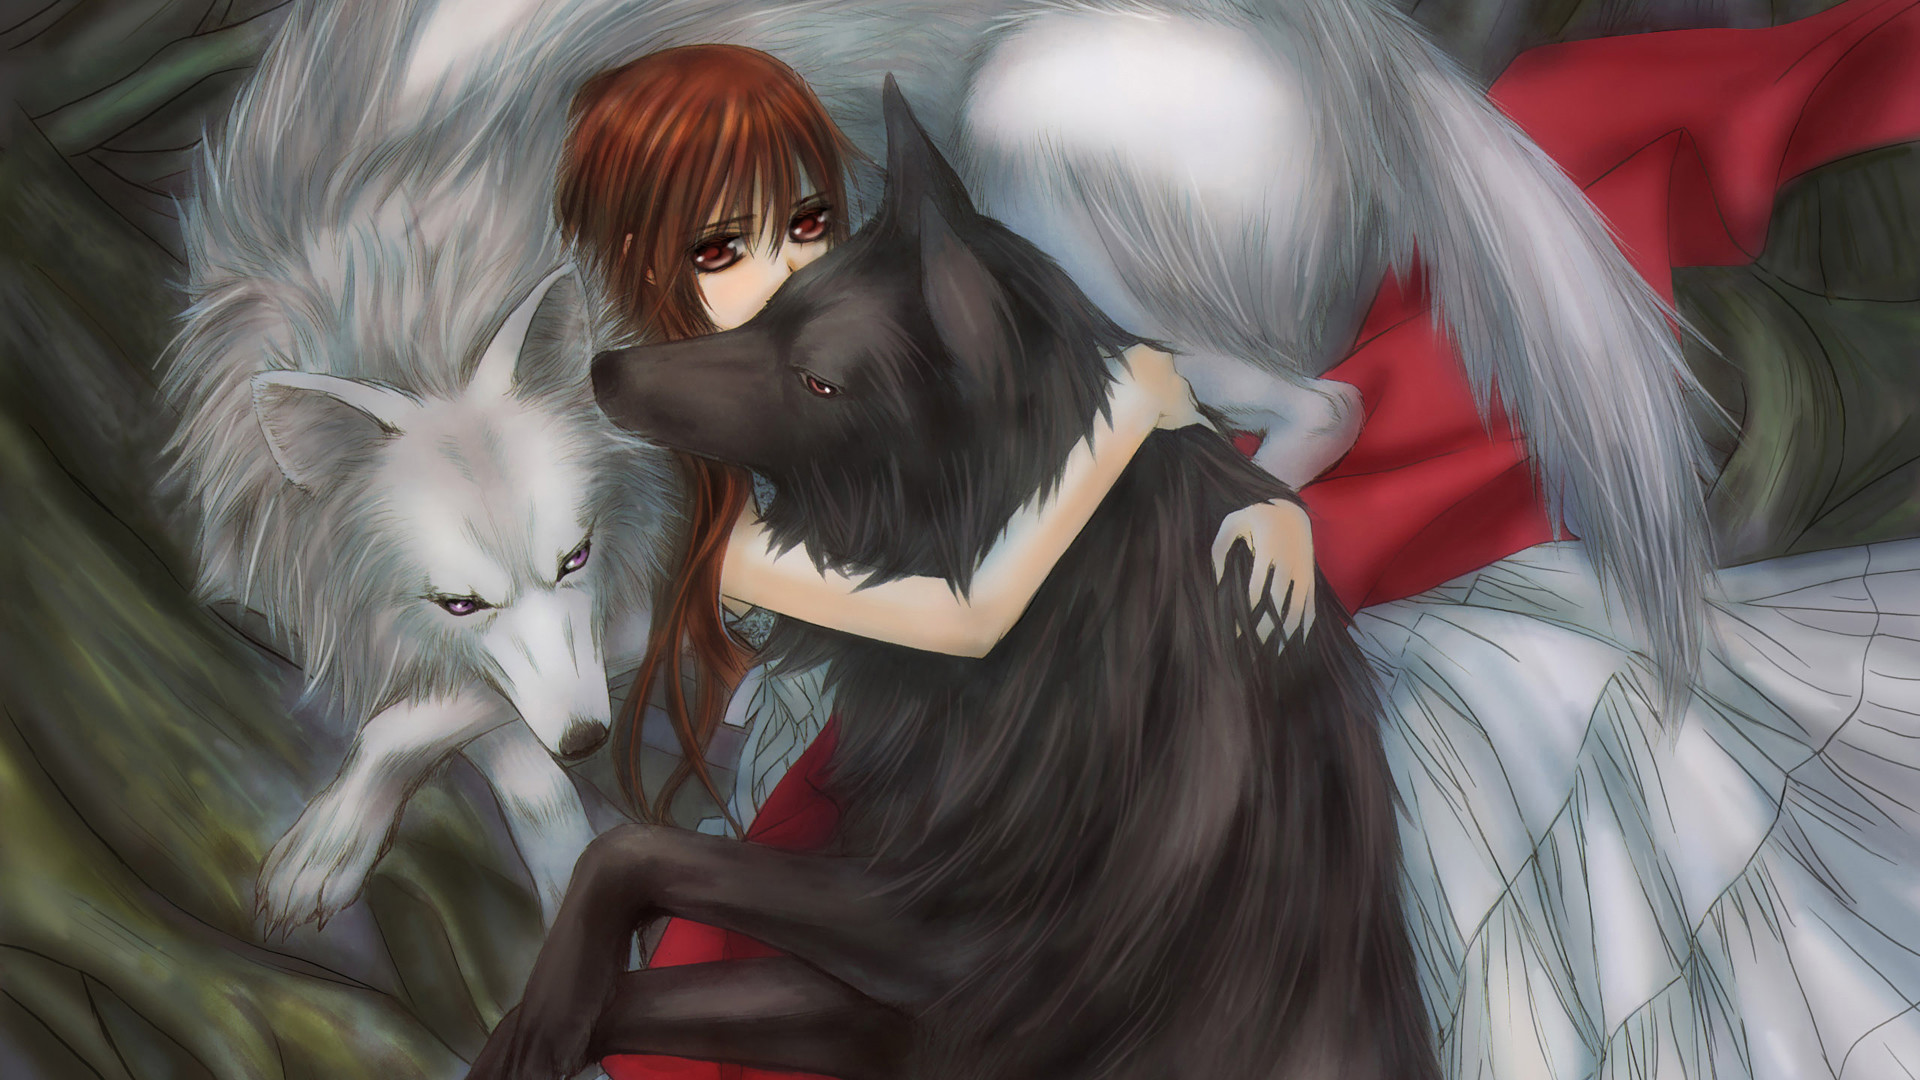 1920x1080 Full HD Wallpaper vampire knight wolf girl redhead